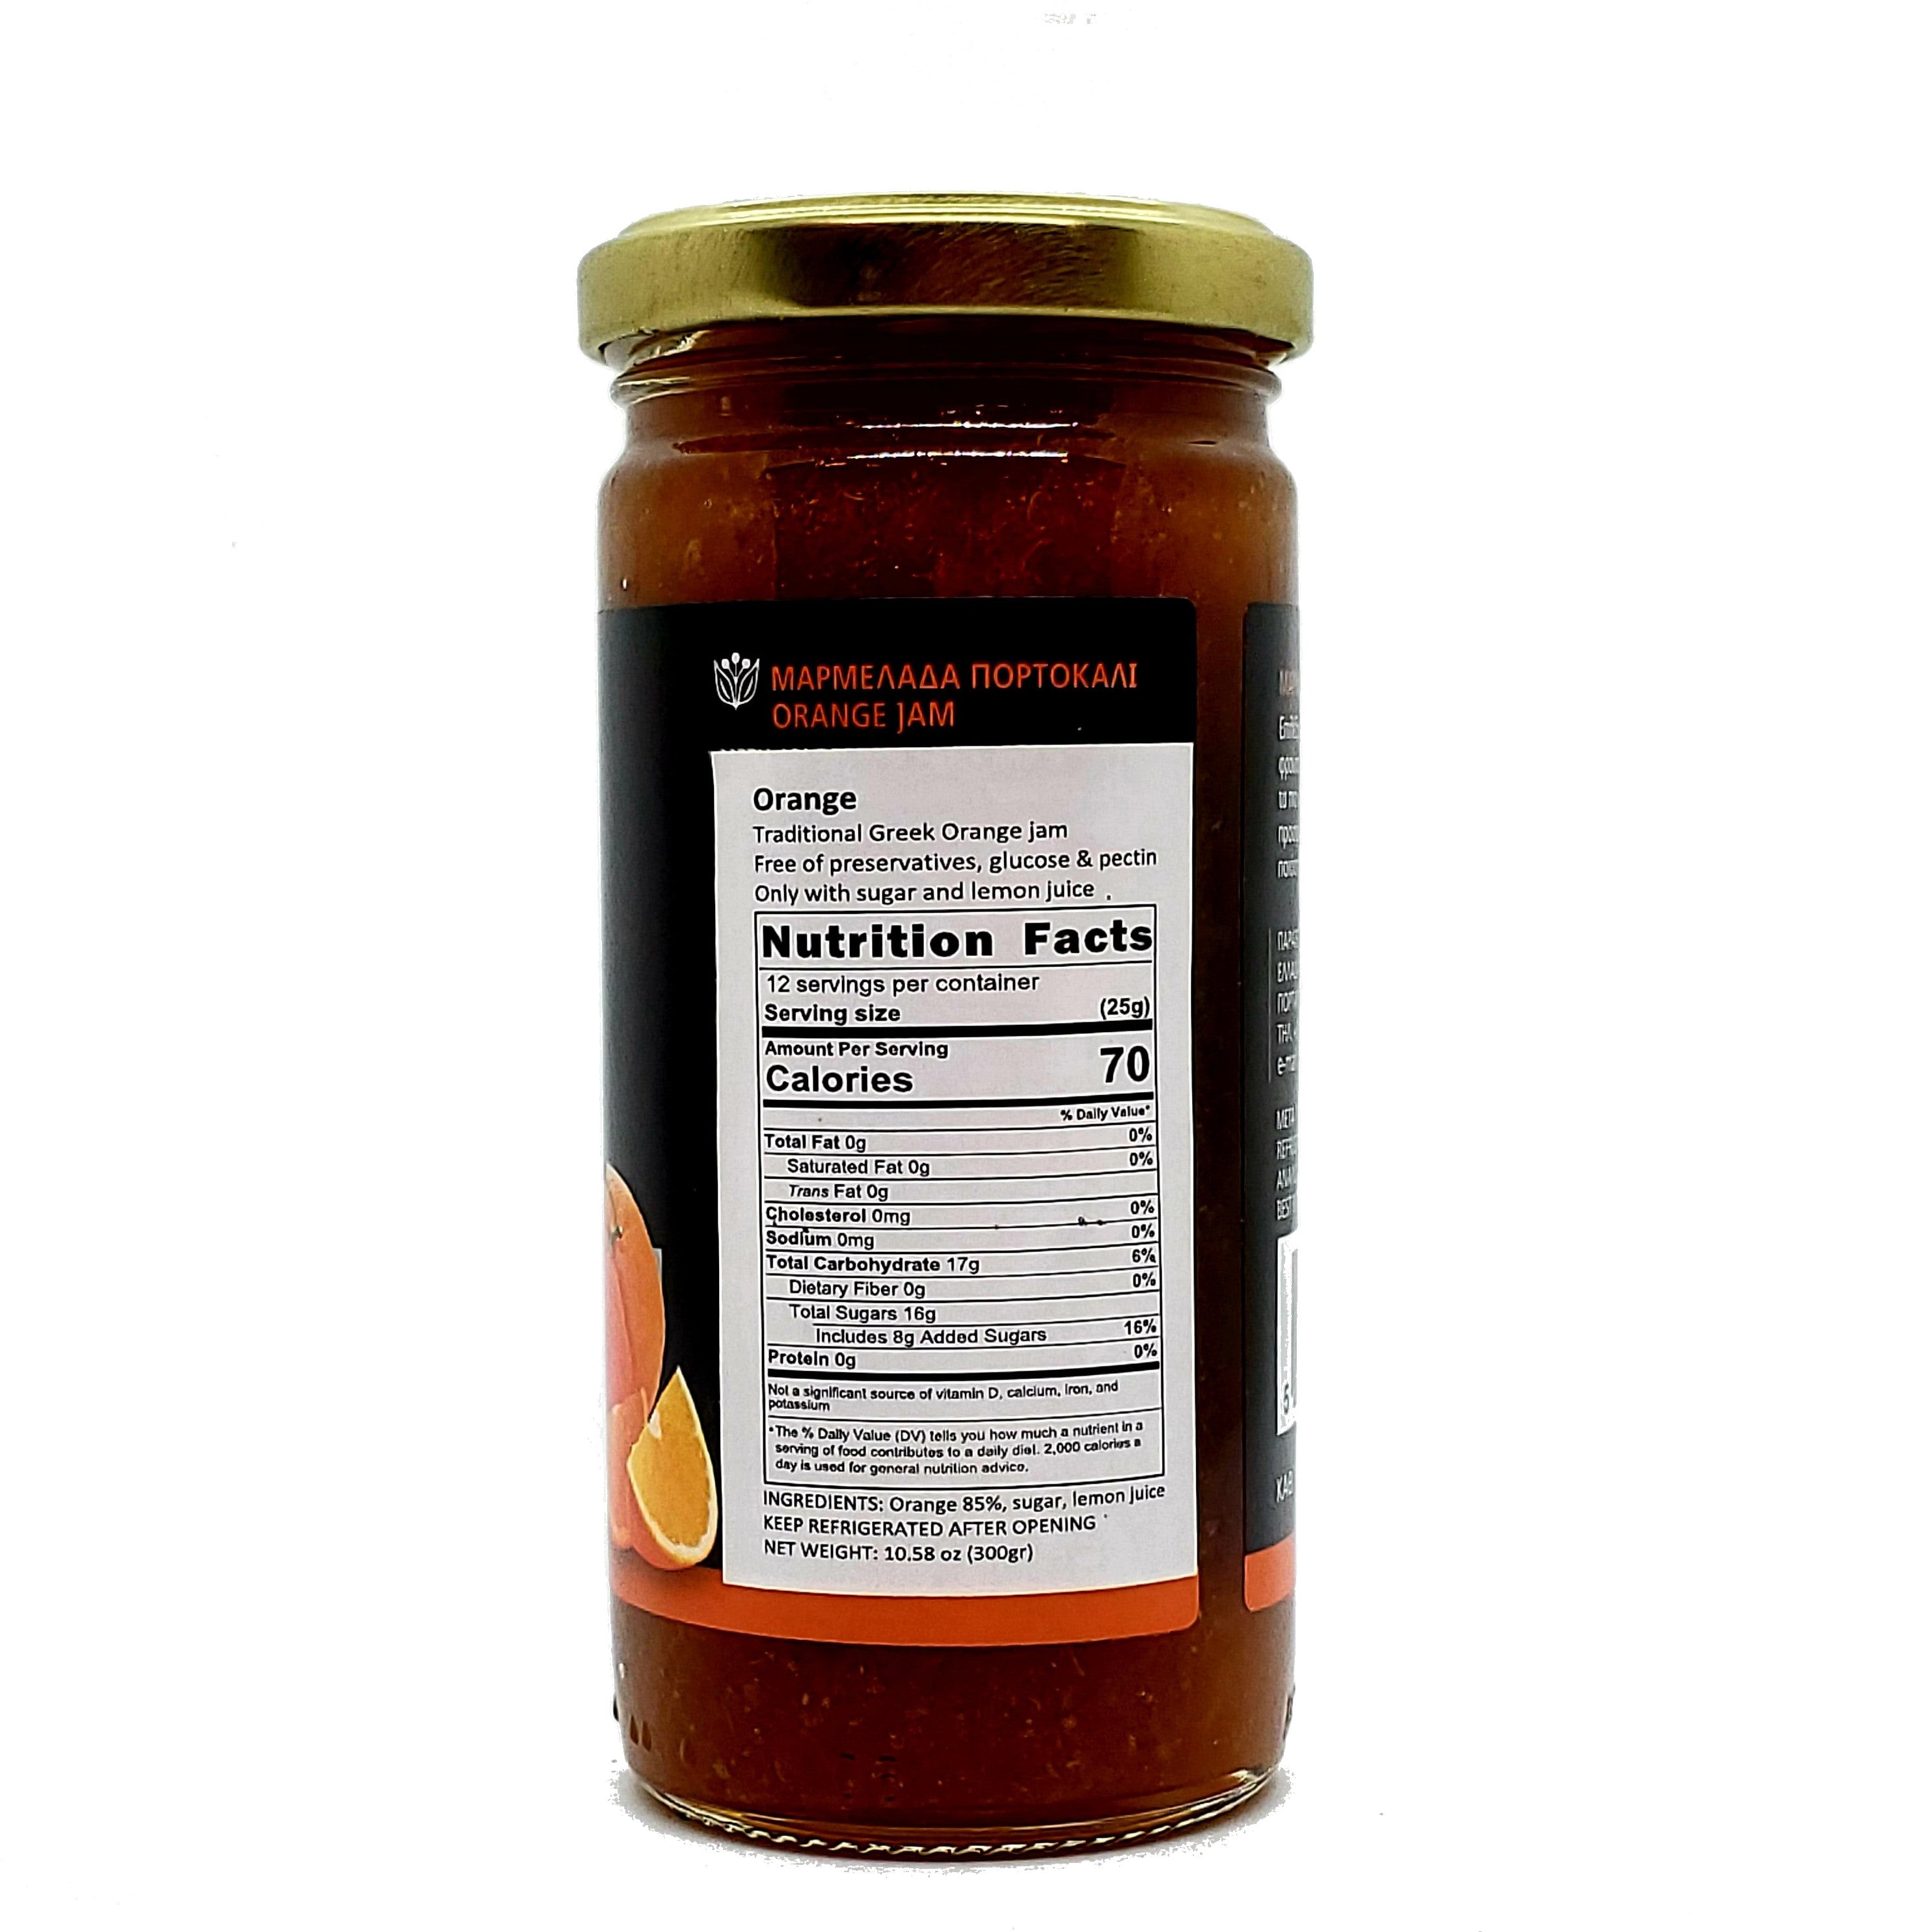 Traditional Orange Jam from Pelion